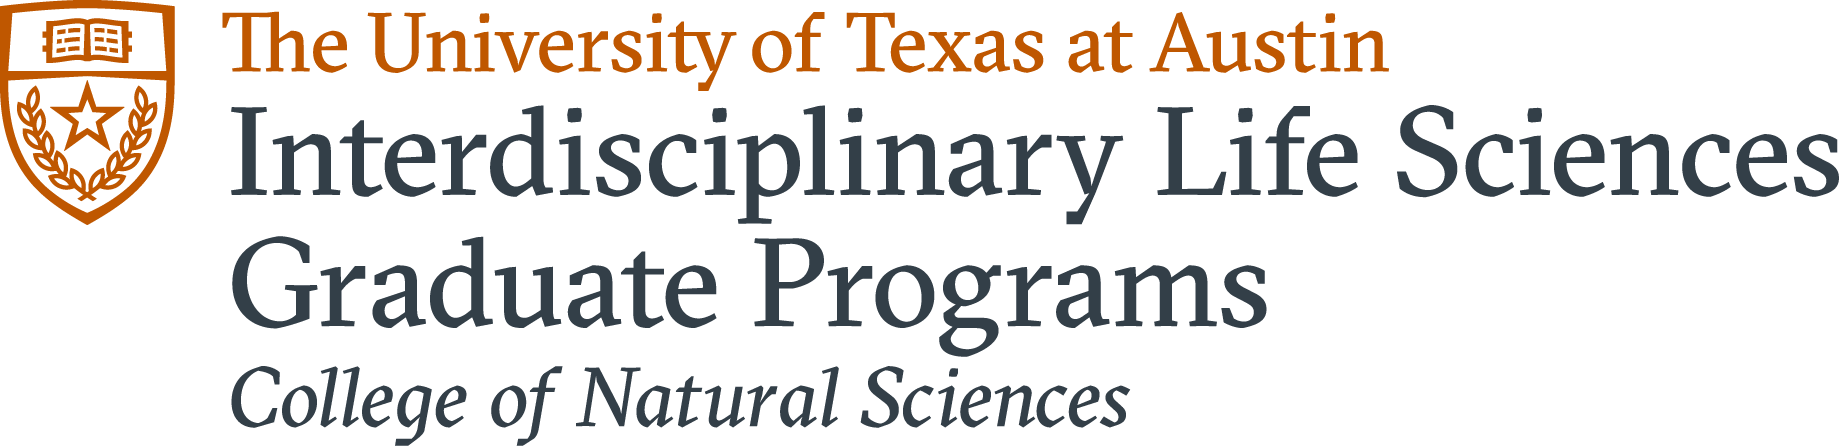 Interdisciplinary Life Sciences Graduate Programs